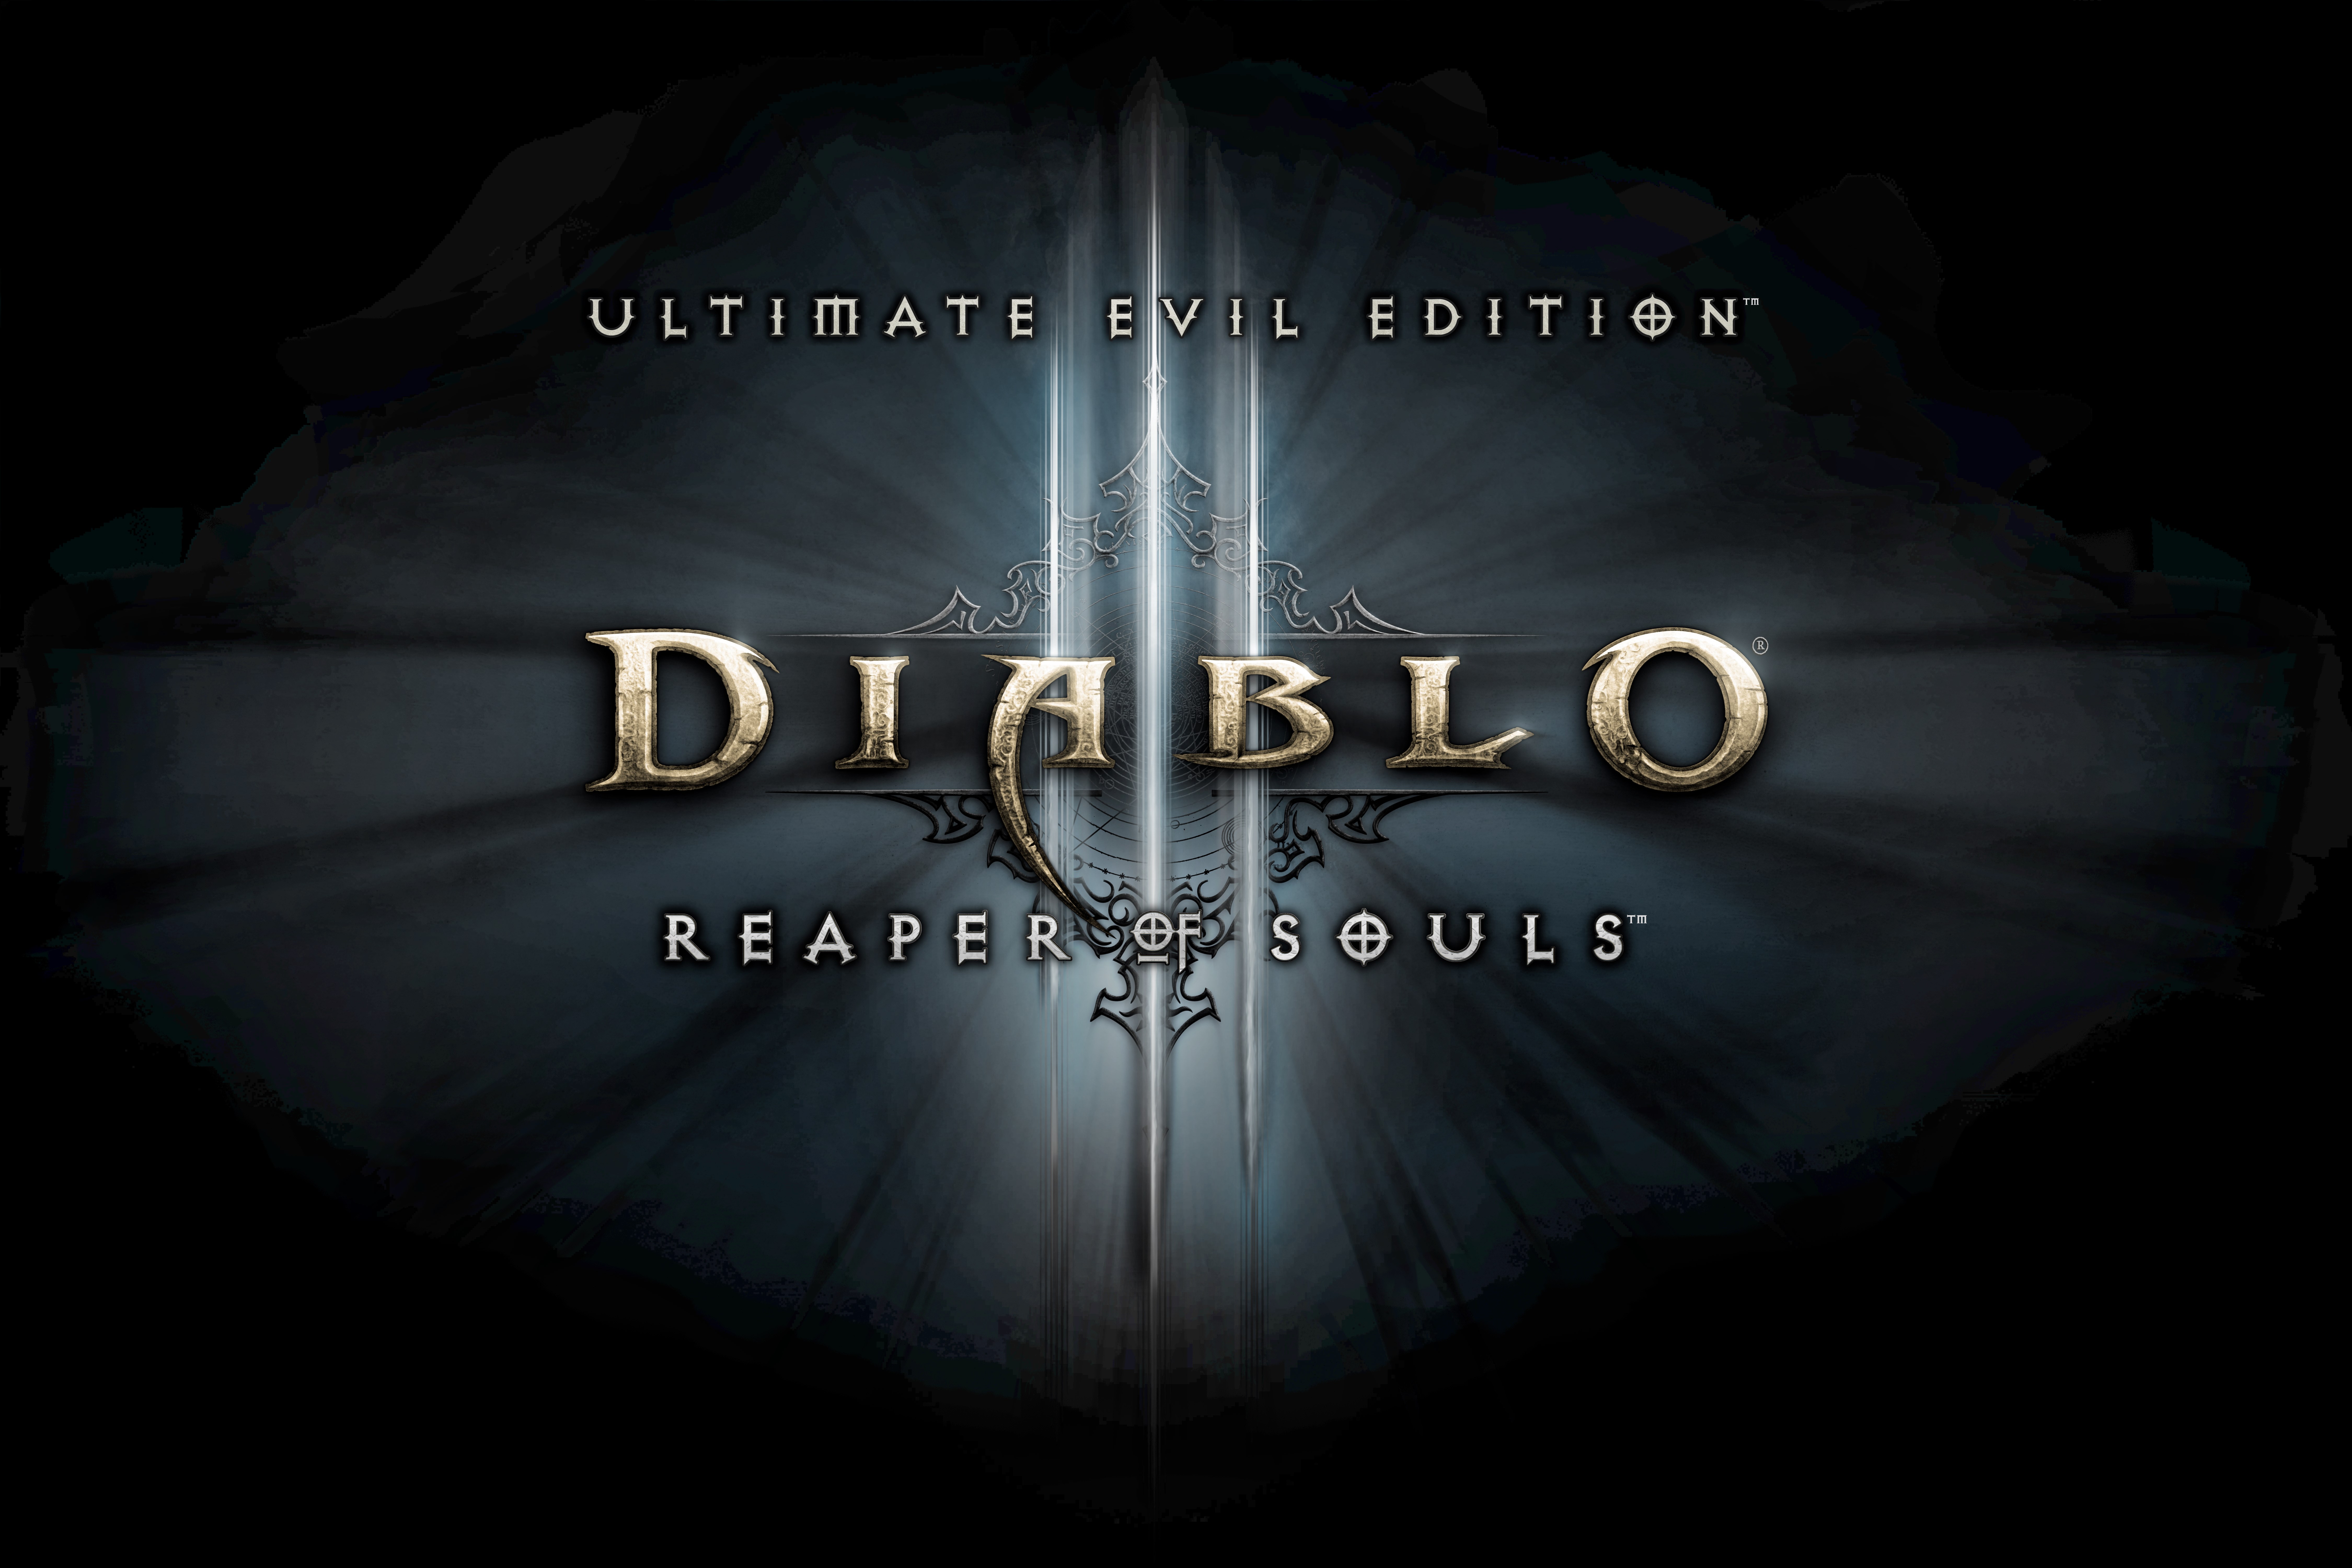 Diablo III: Reaper of Souls – Ultimate Evil Edition jetzt erhältlich!